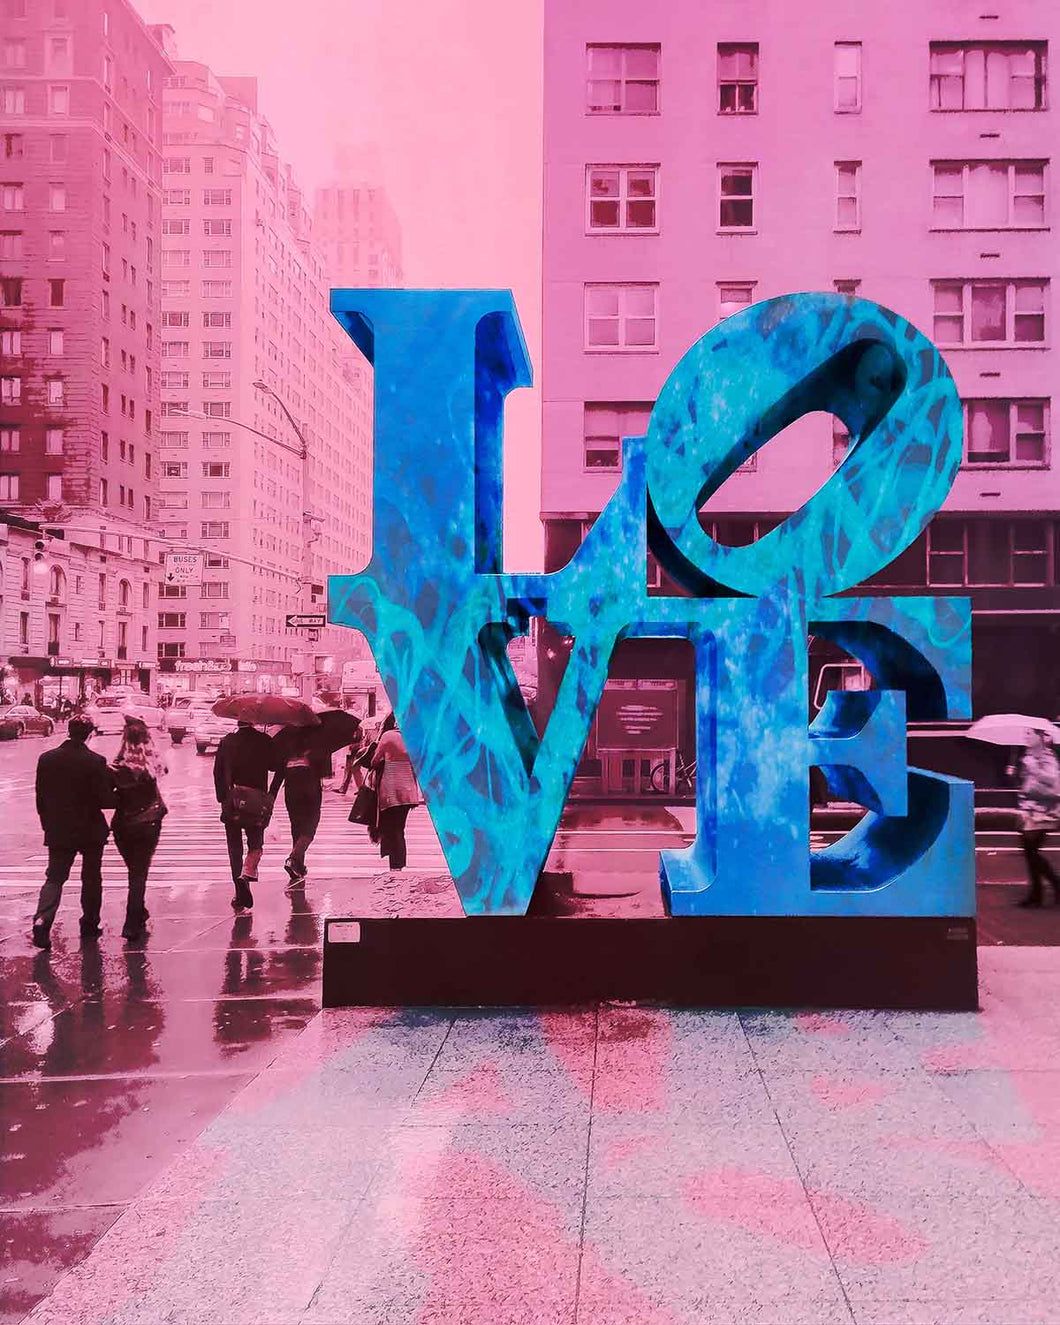 robert indiana inspired pop art image of LOVE in New York City